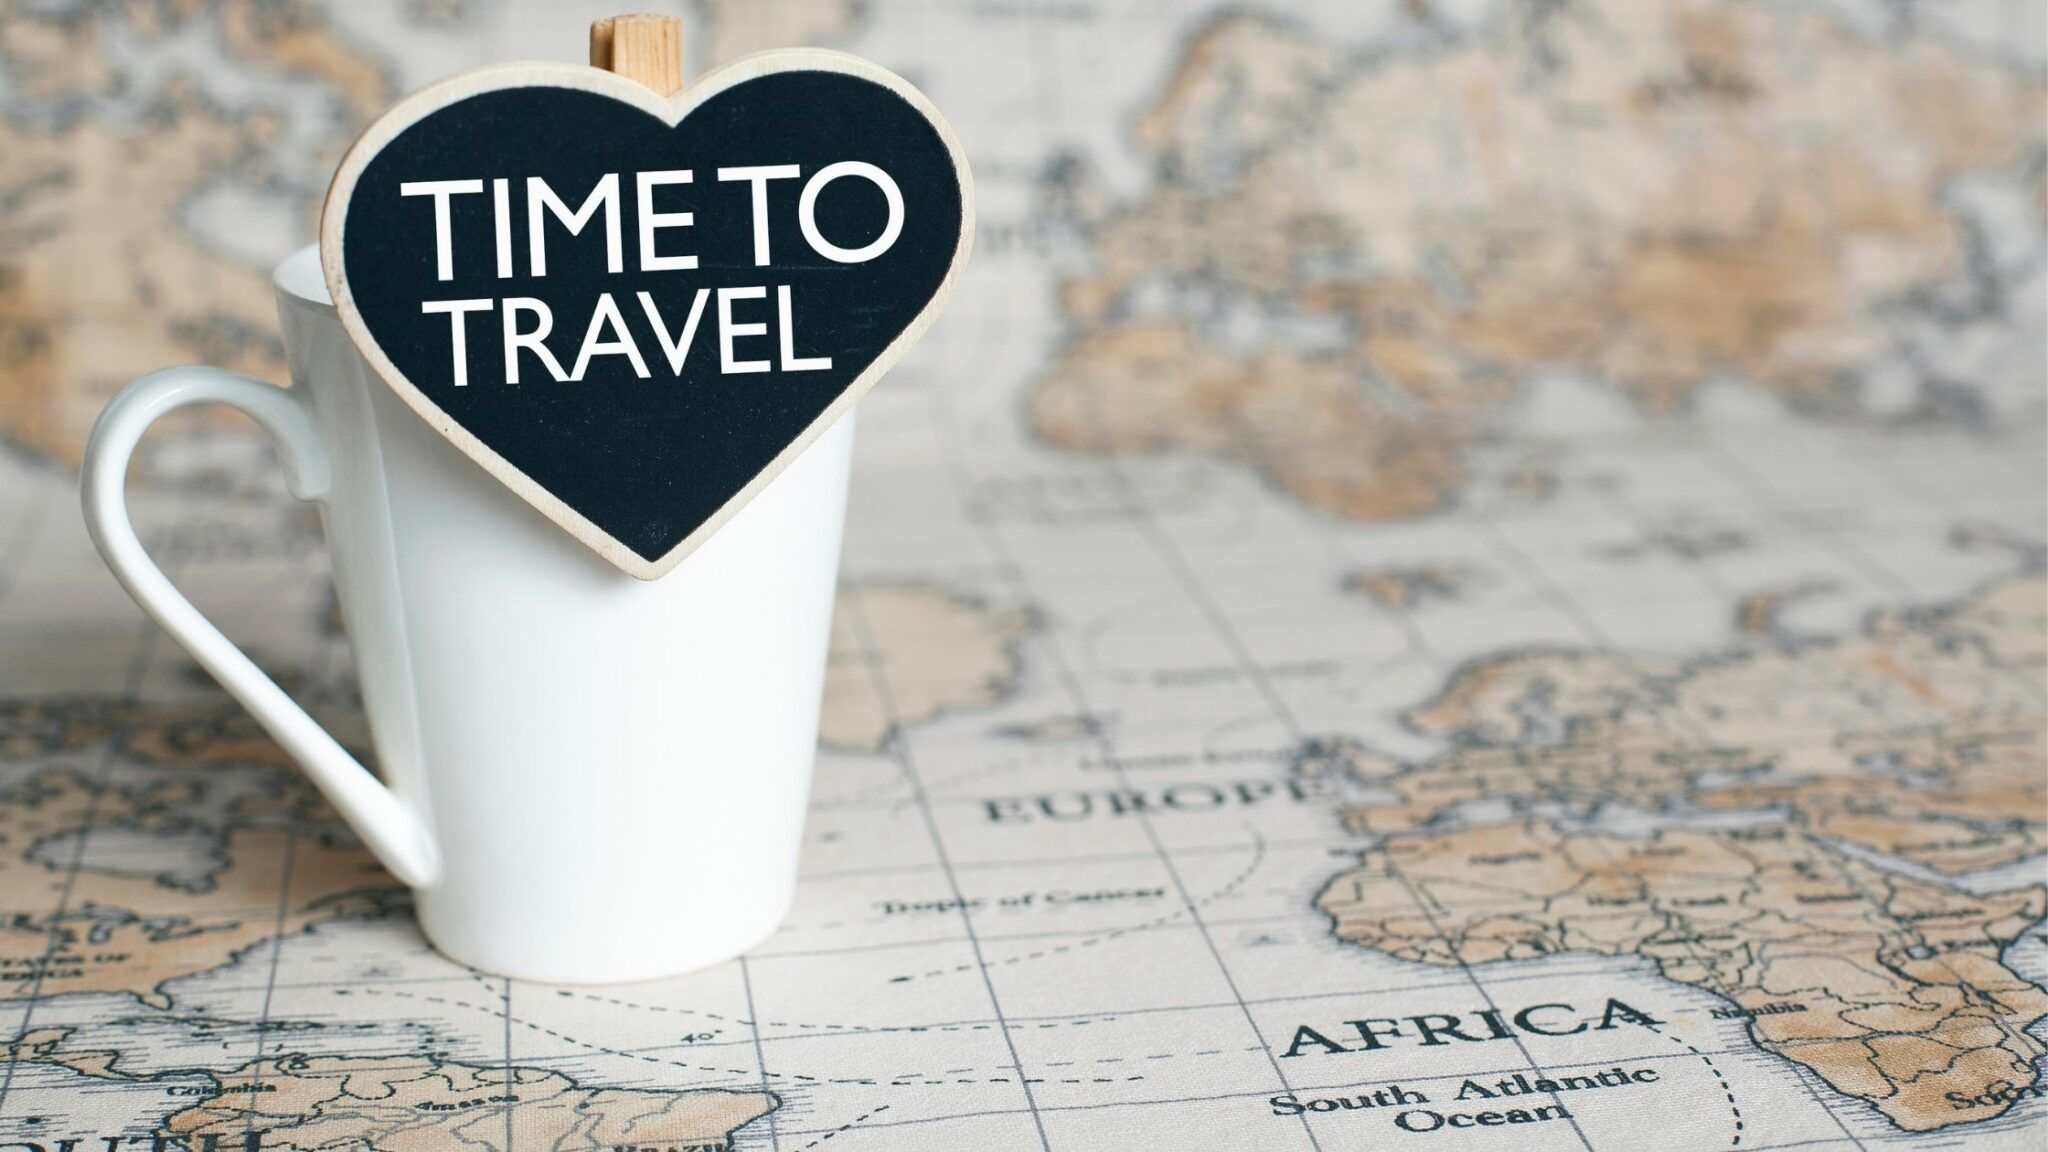 Time-to-travel-reisen-tipp-cultureandcream-blogpost